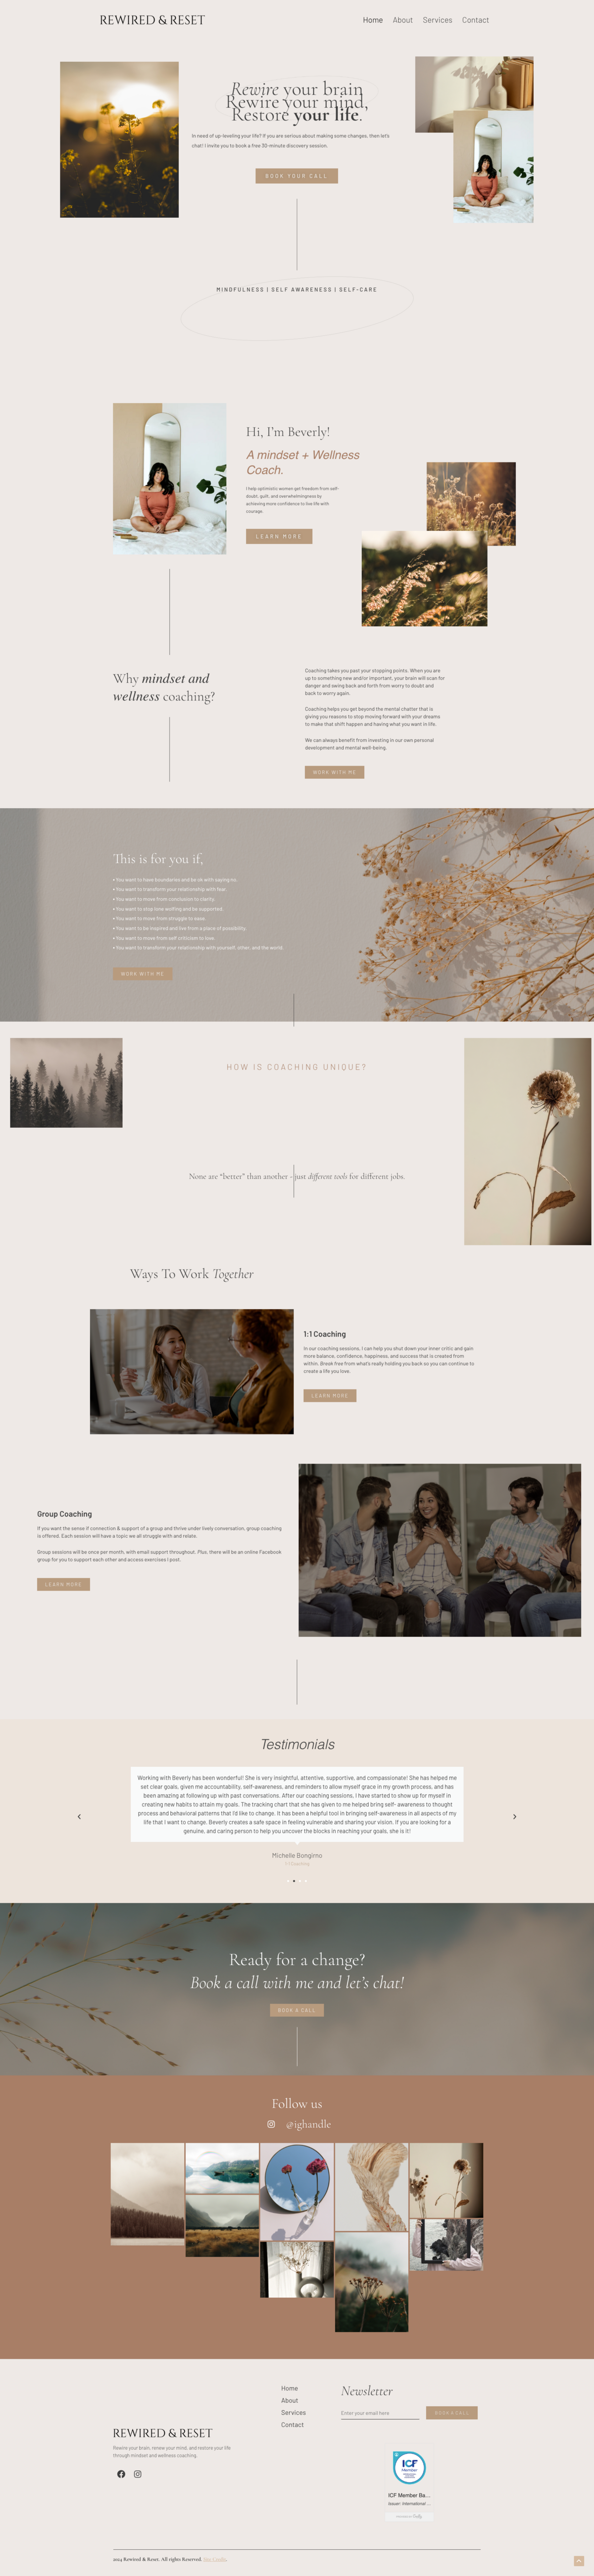 dainty-creative-co-portfolio-online-coach-rewired-reset-mockup-custom-website-design-seo